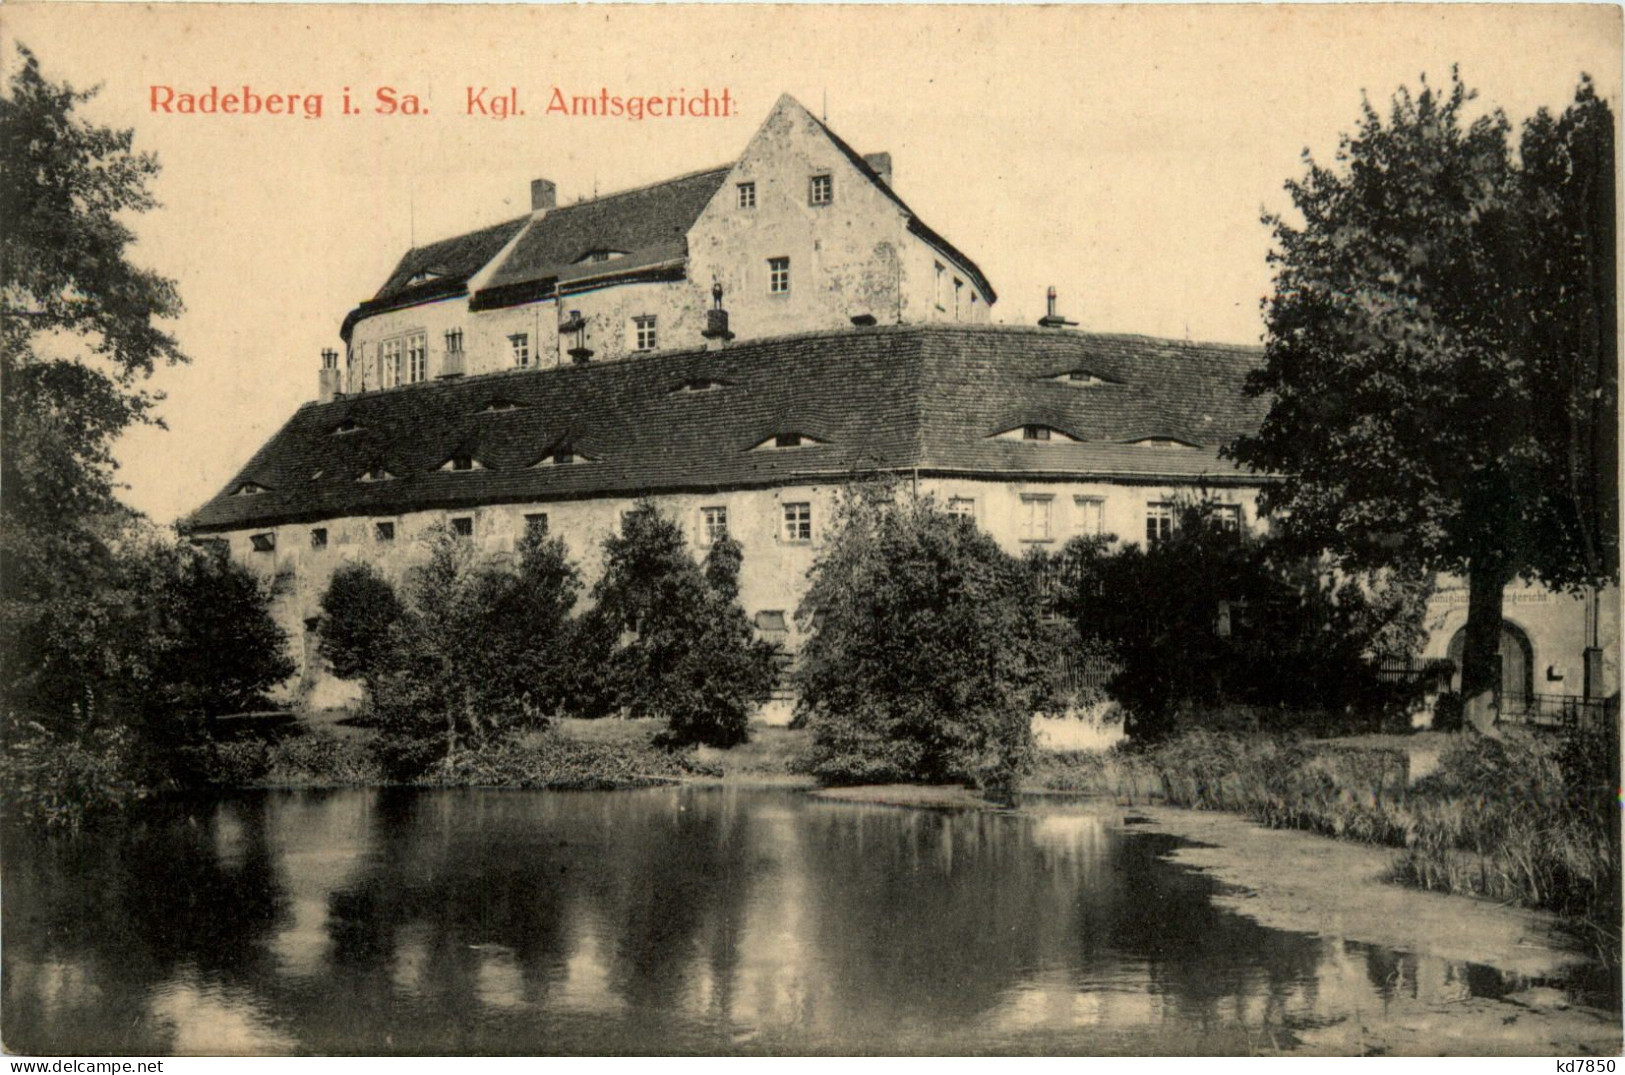 Radeberg, Kgl. Amtsgericht - Bautzen